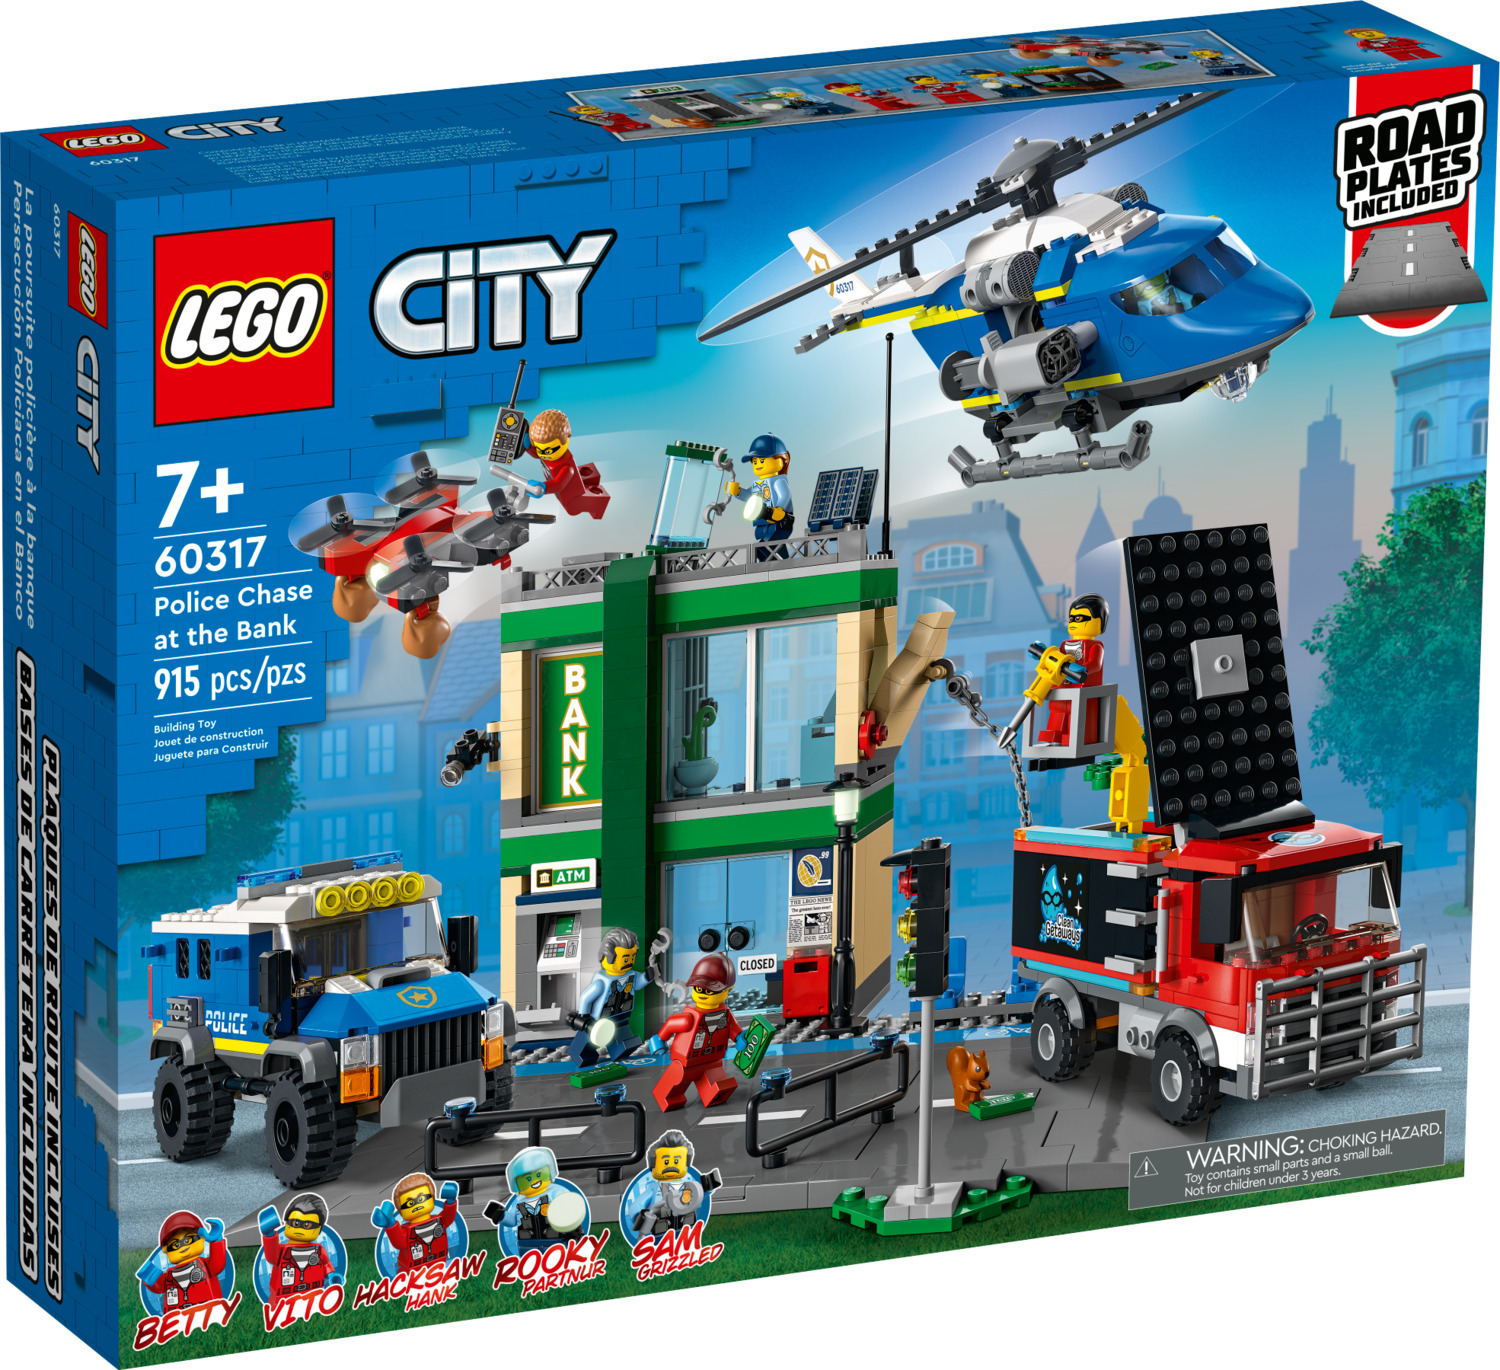 ik heb nodig Veeg pijn 60317 Police Chase at the Bank - LEGO City - Pickup Only - LEGO